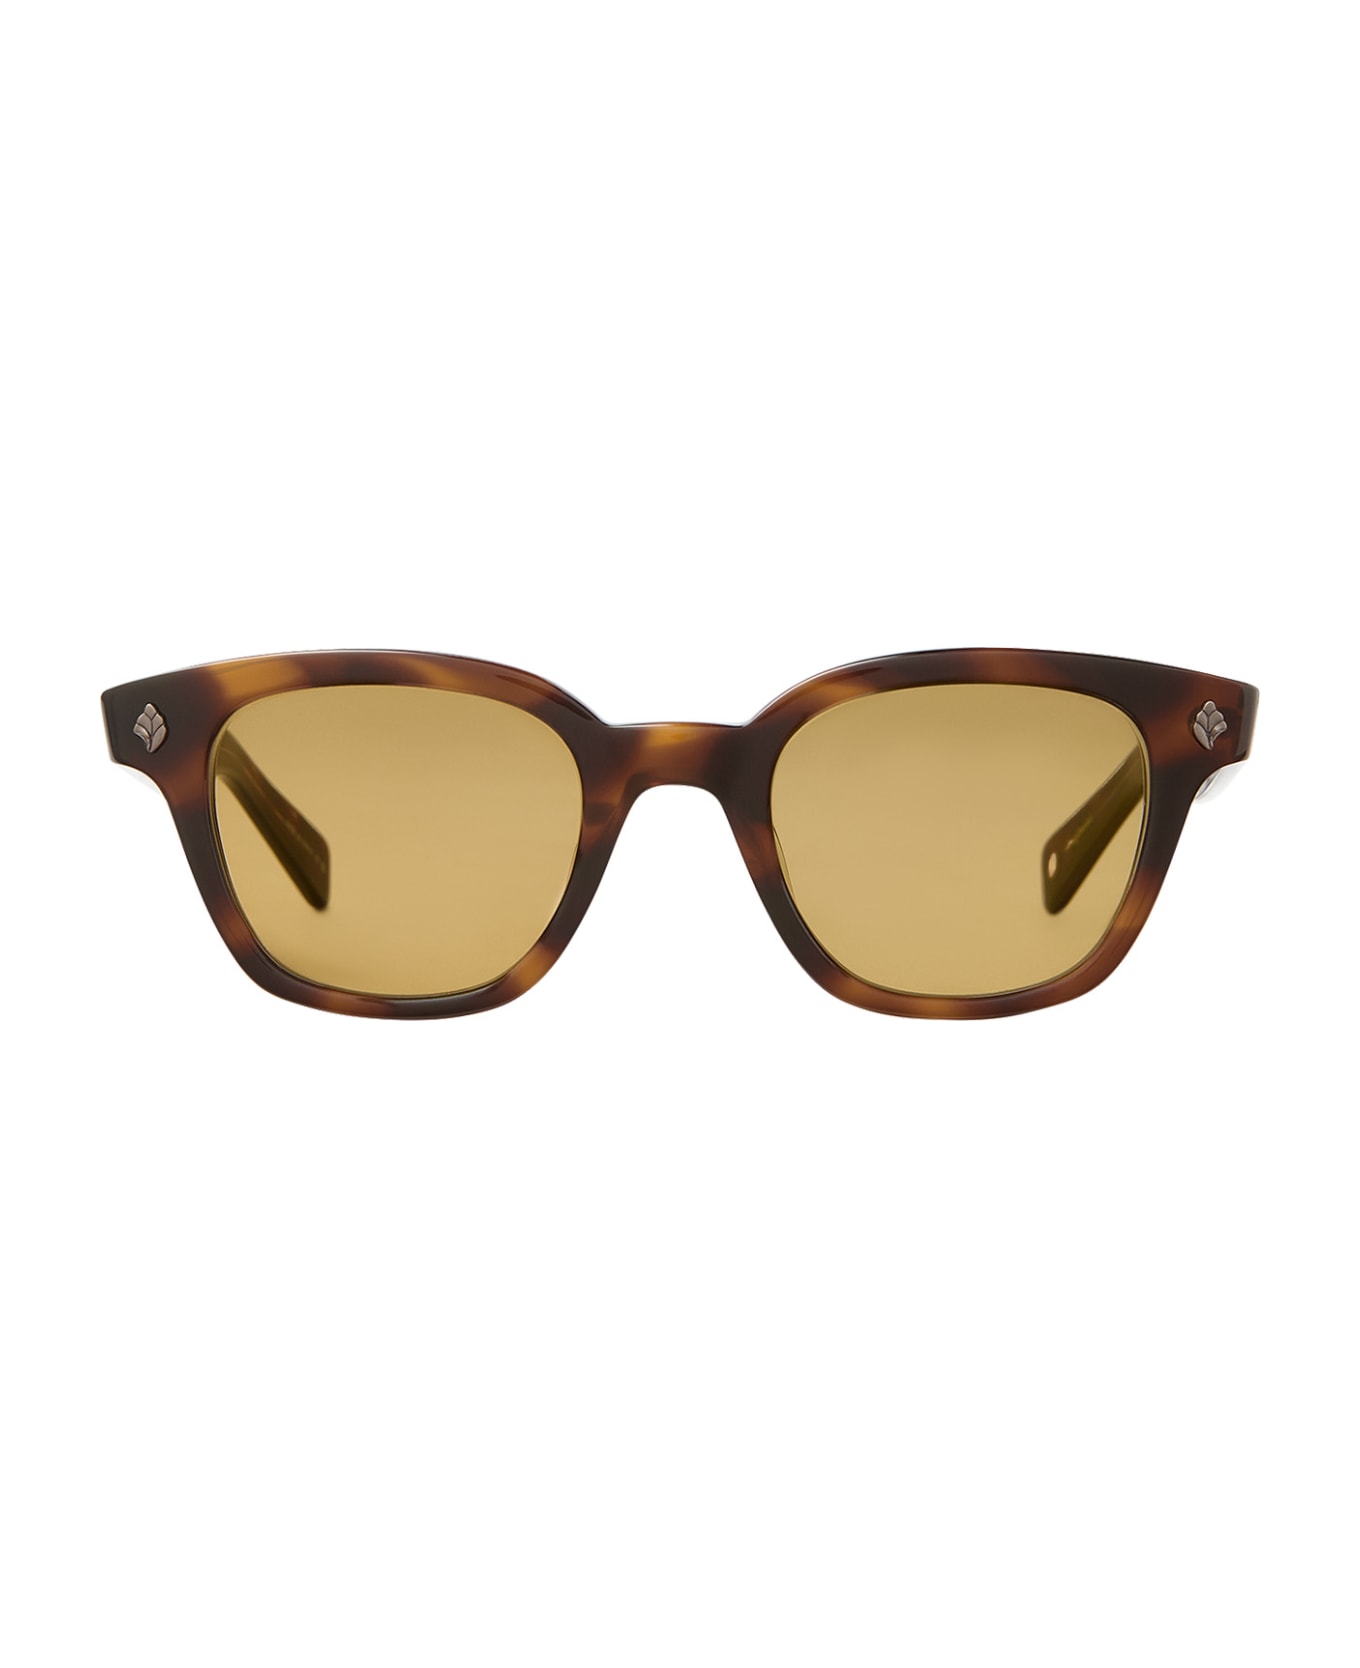 Garrett Leight Naples Sun Spotted Brown Shell Sunglasses - Spotted Brown Shell サングラス